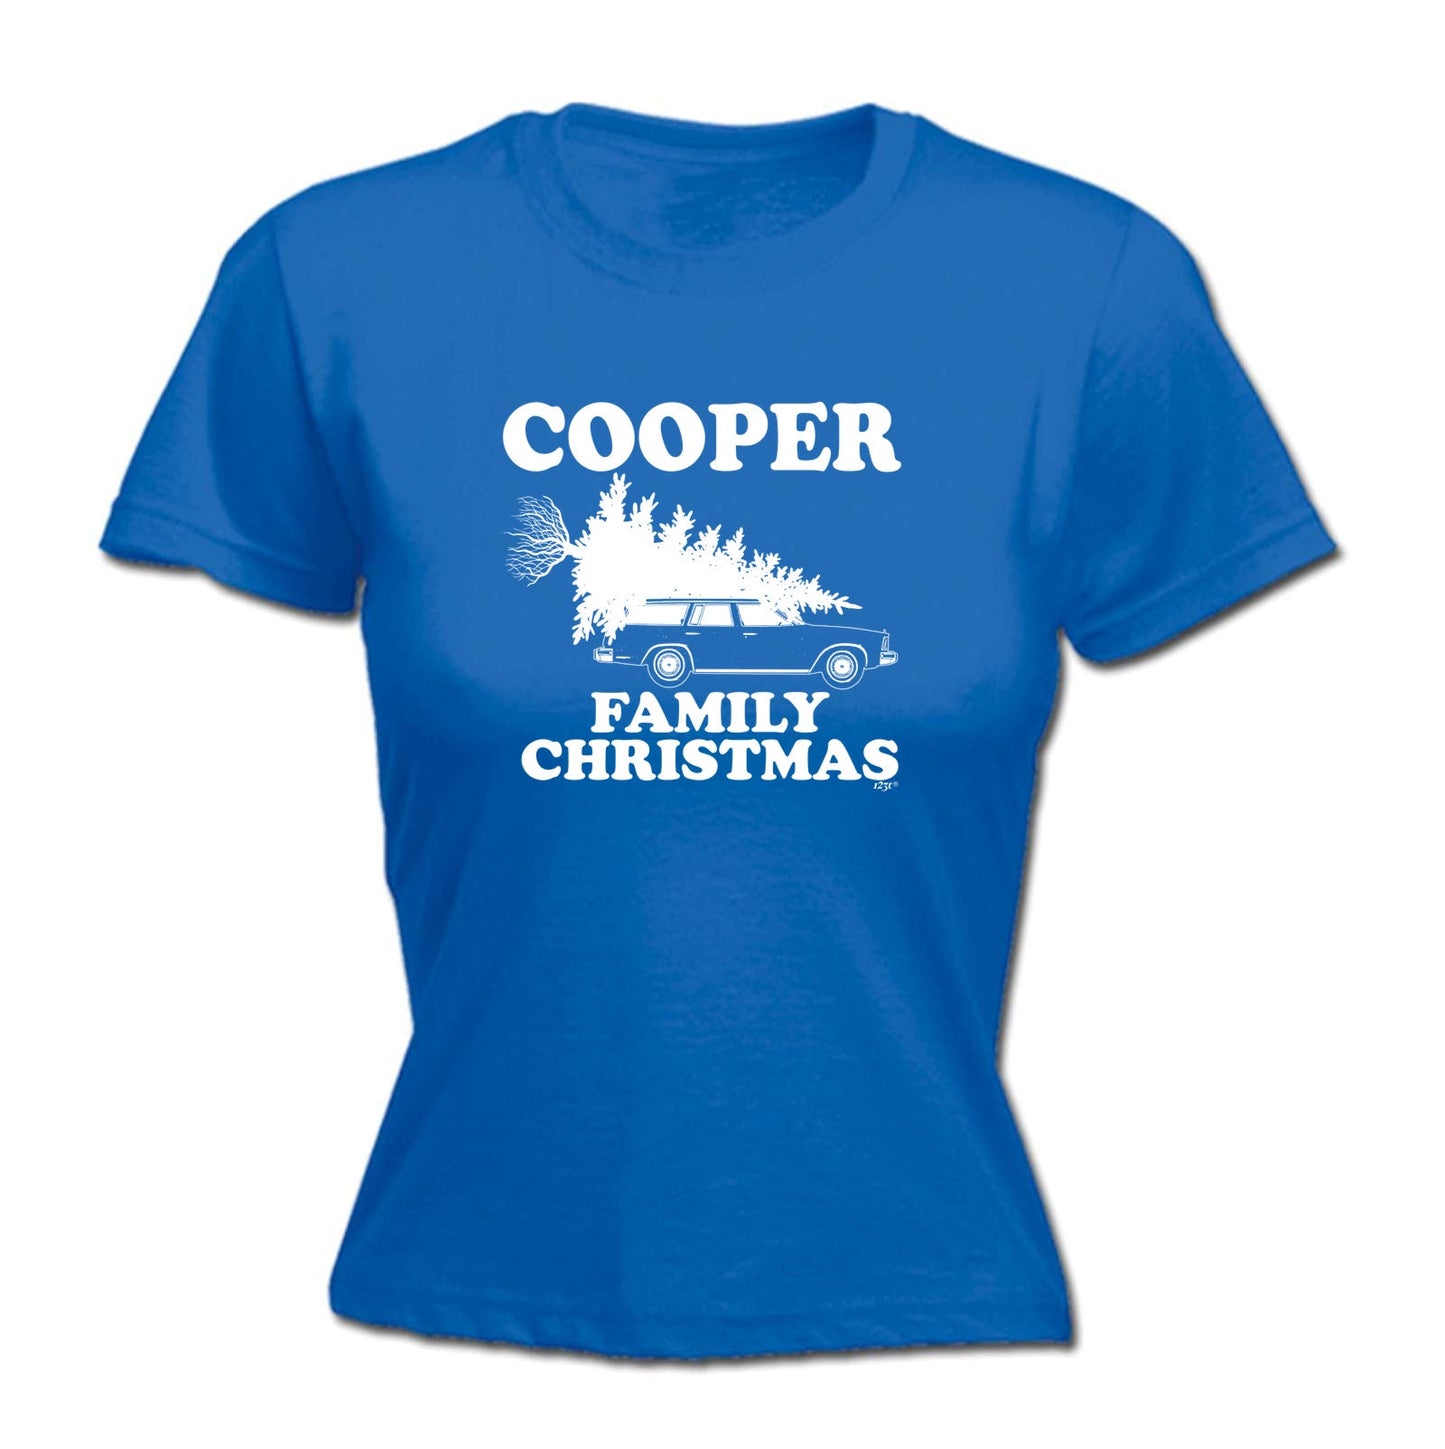 Family Christmas Cooper - Xmas Novelty Womens T-Shirt Tshirt